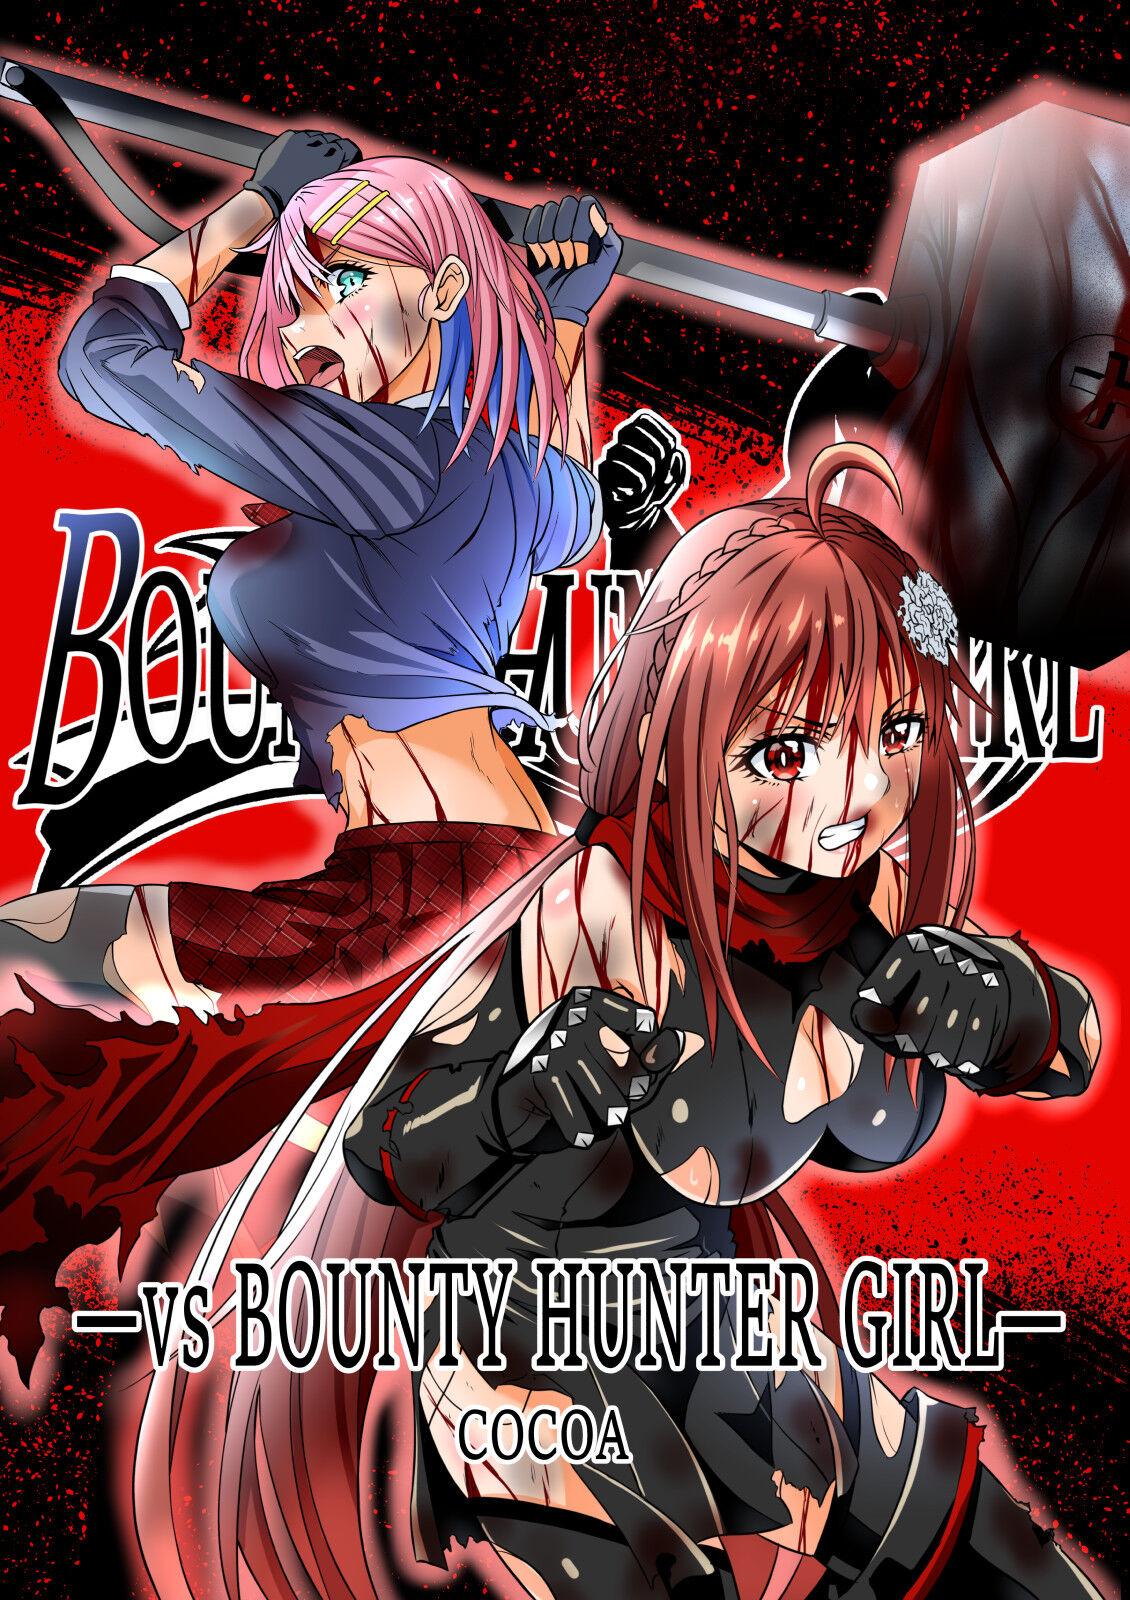 BOUNTY HUNTER GIRL vs BOUNTY HUNTER GIRL [COCOA] (第26話) 0